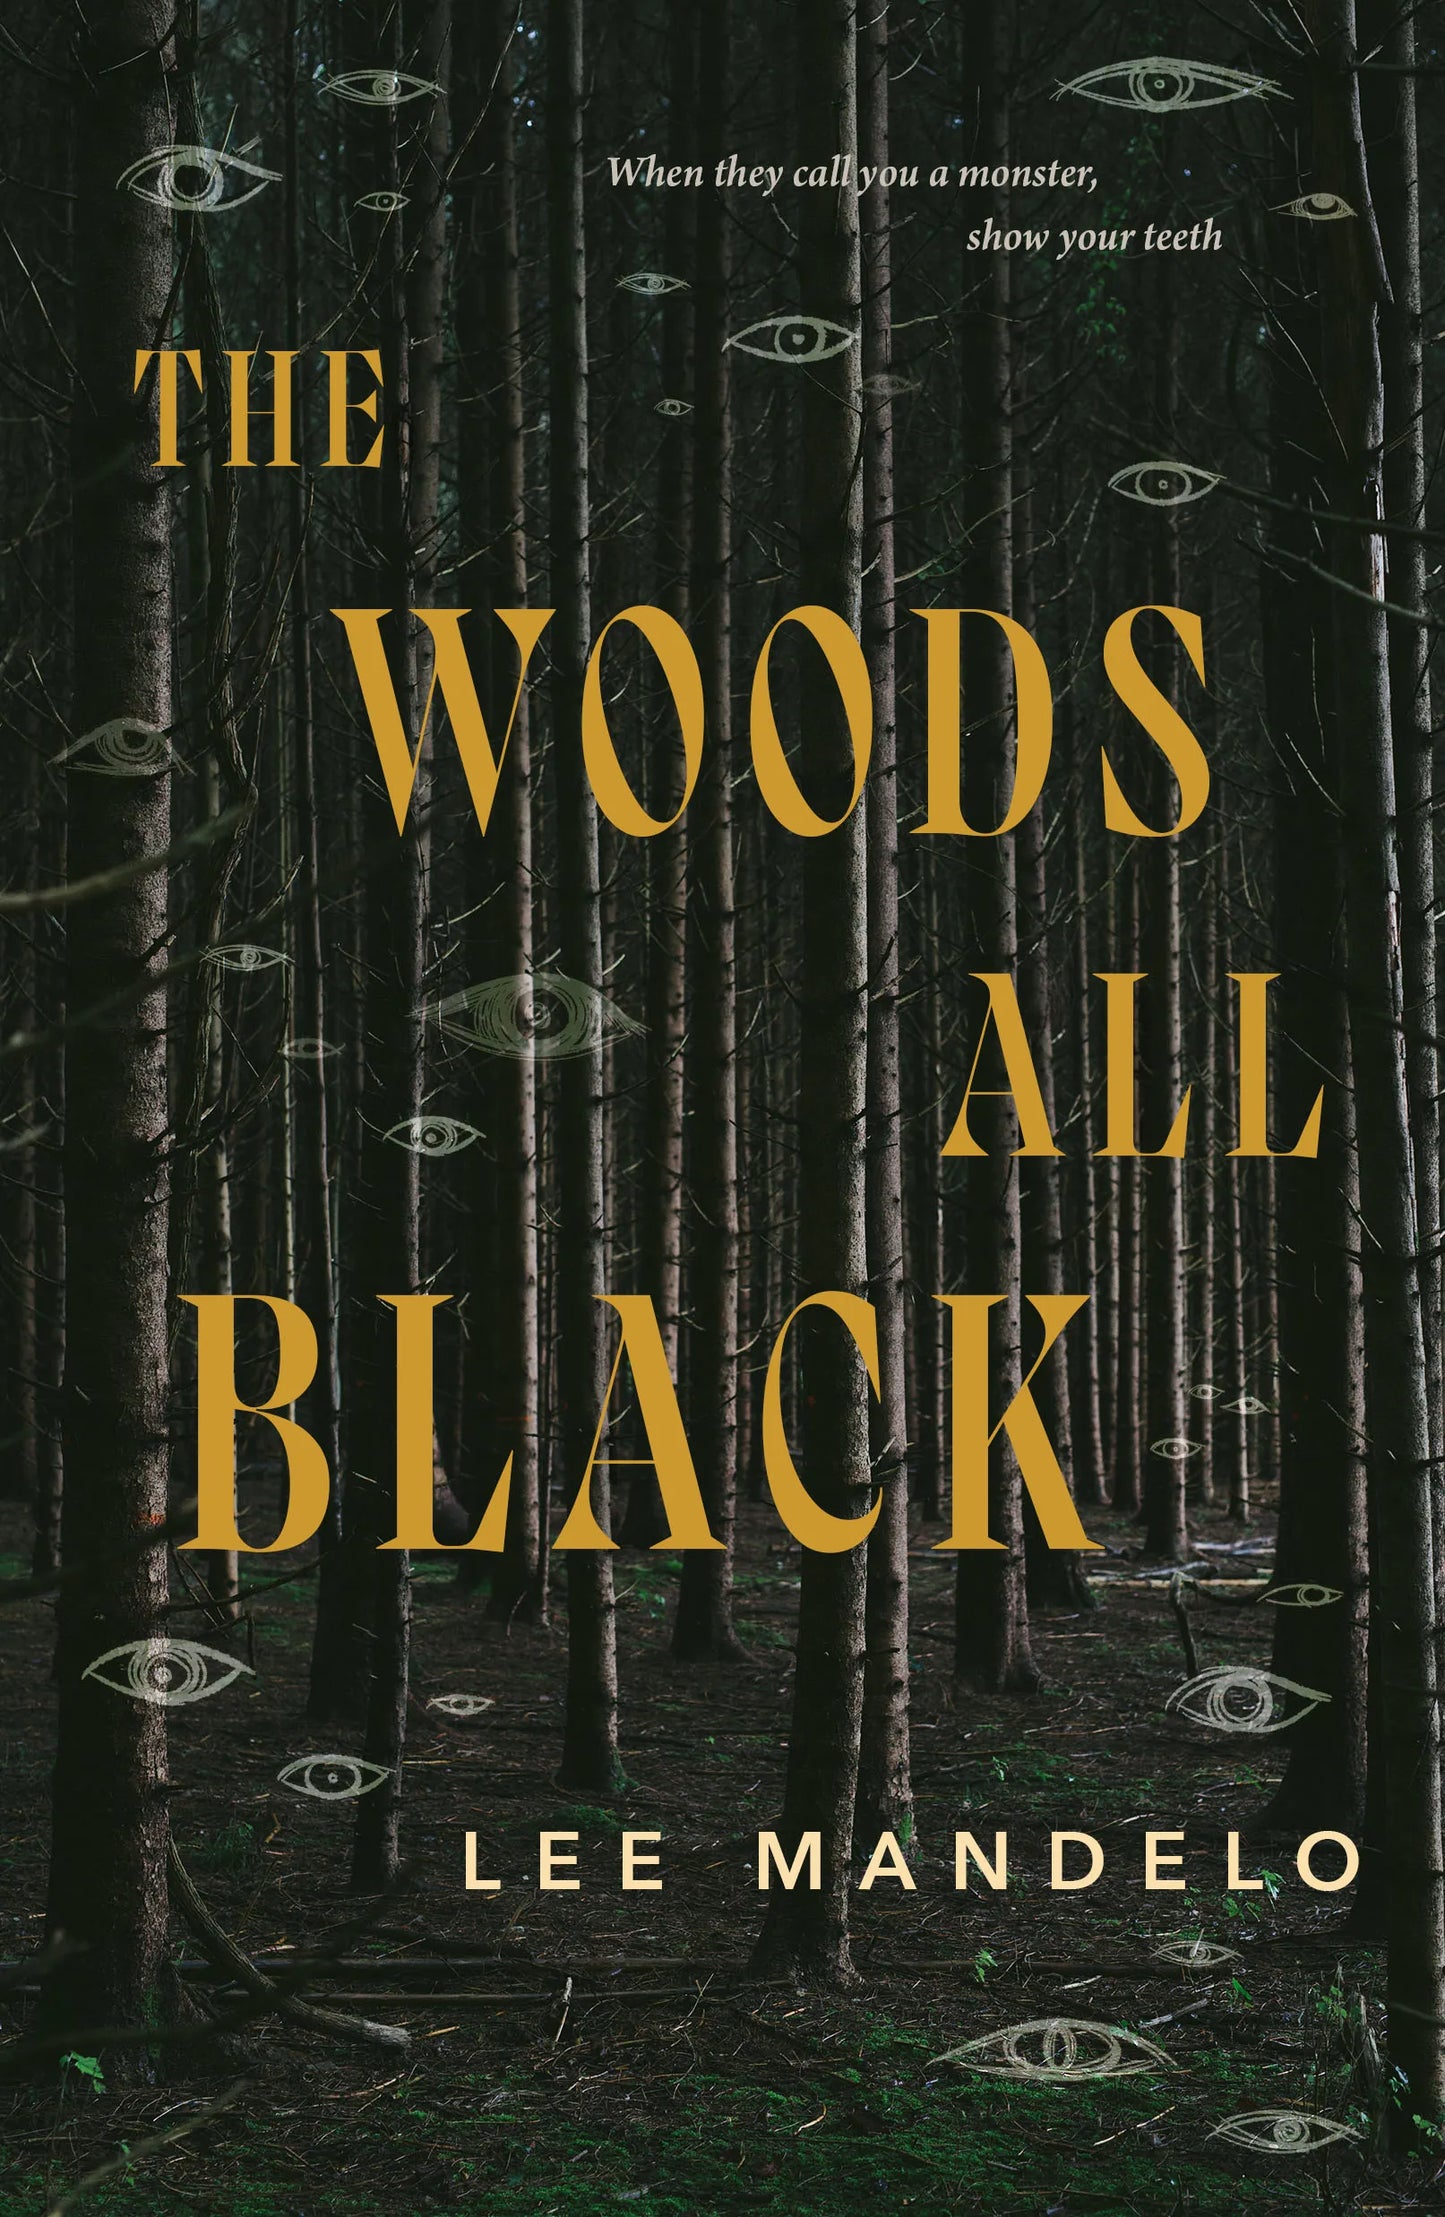 The Woods All Black - Lee Mandelo